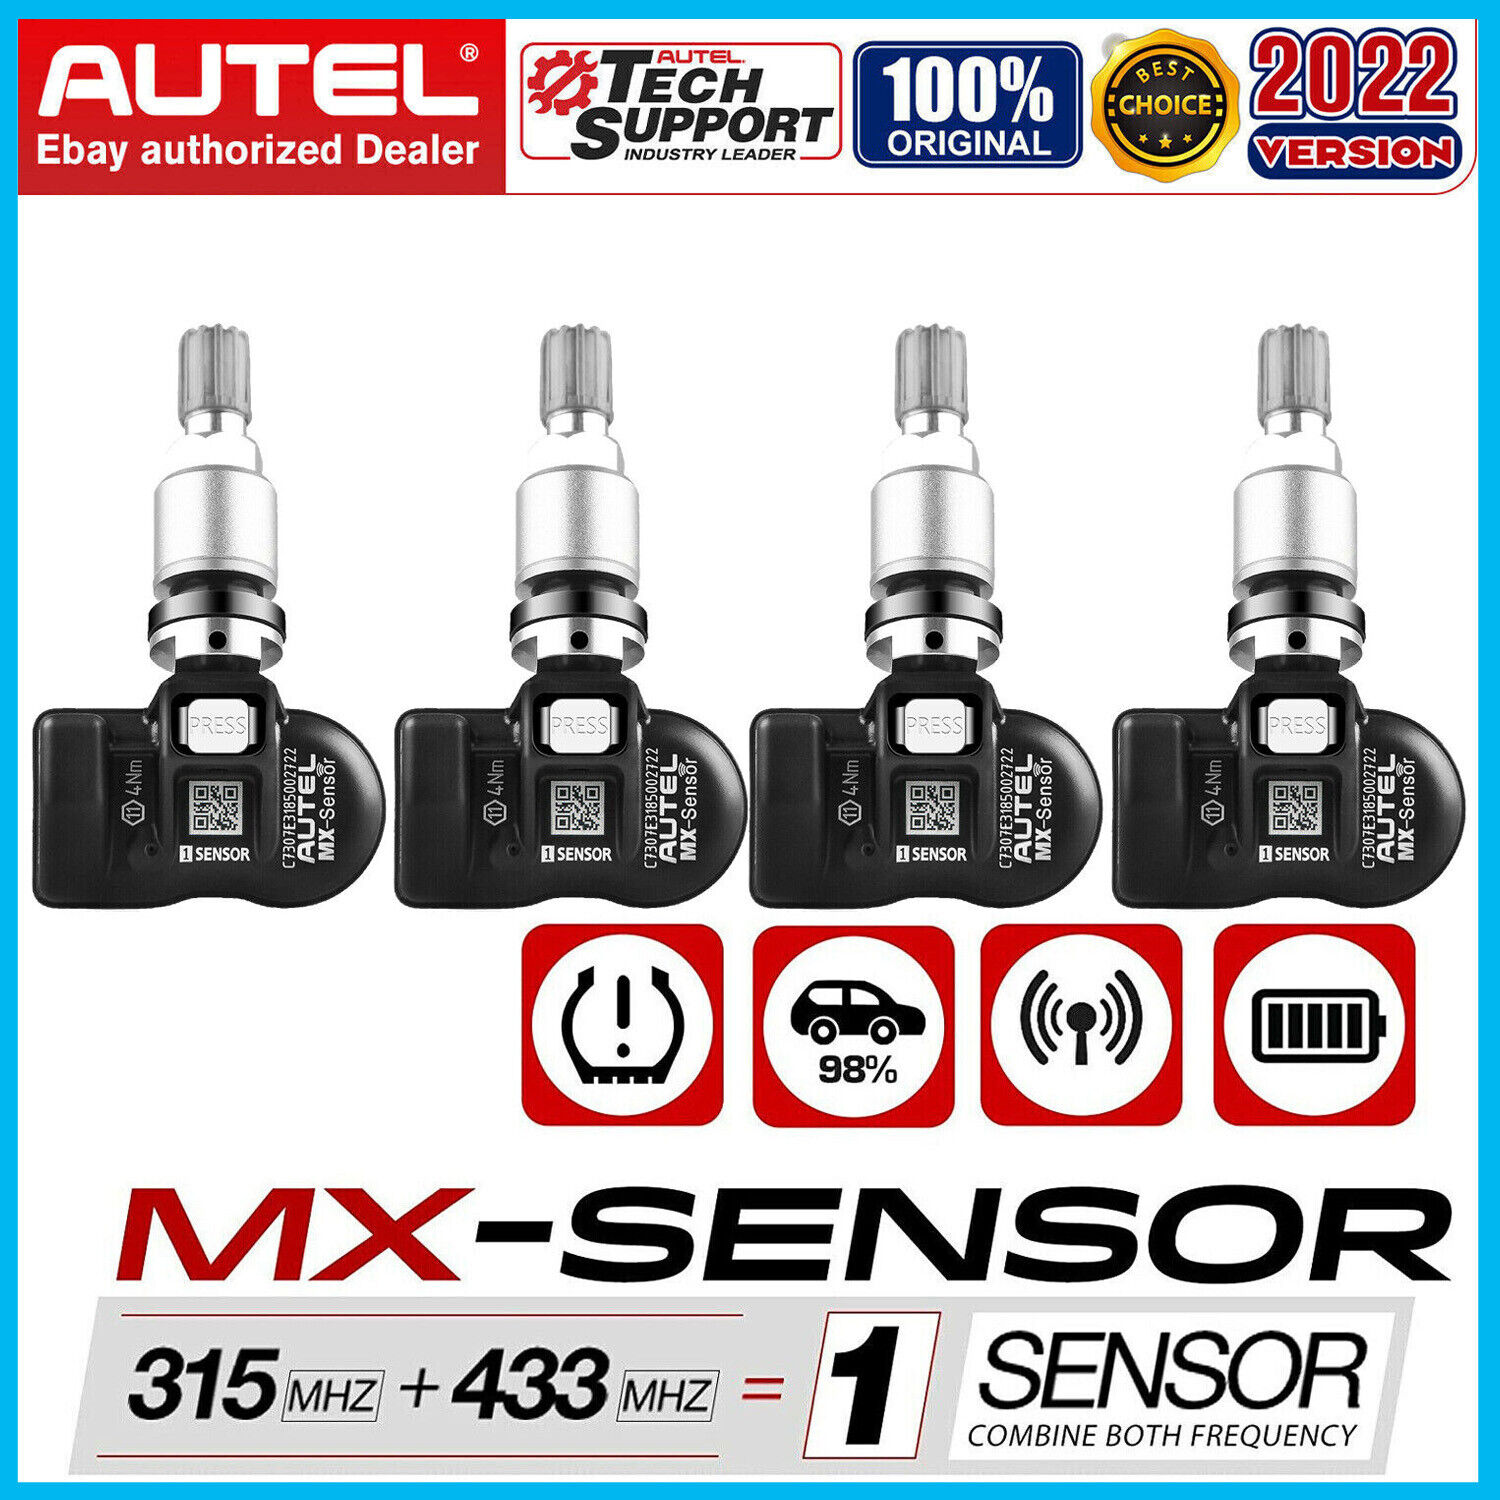 4x Autel MaxiTPMS 315MHz/433MHz 2 in1 MX-Sensor Pro/grammable Tire Pressure TPMS